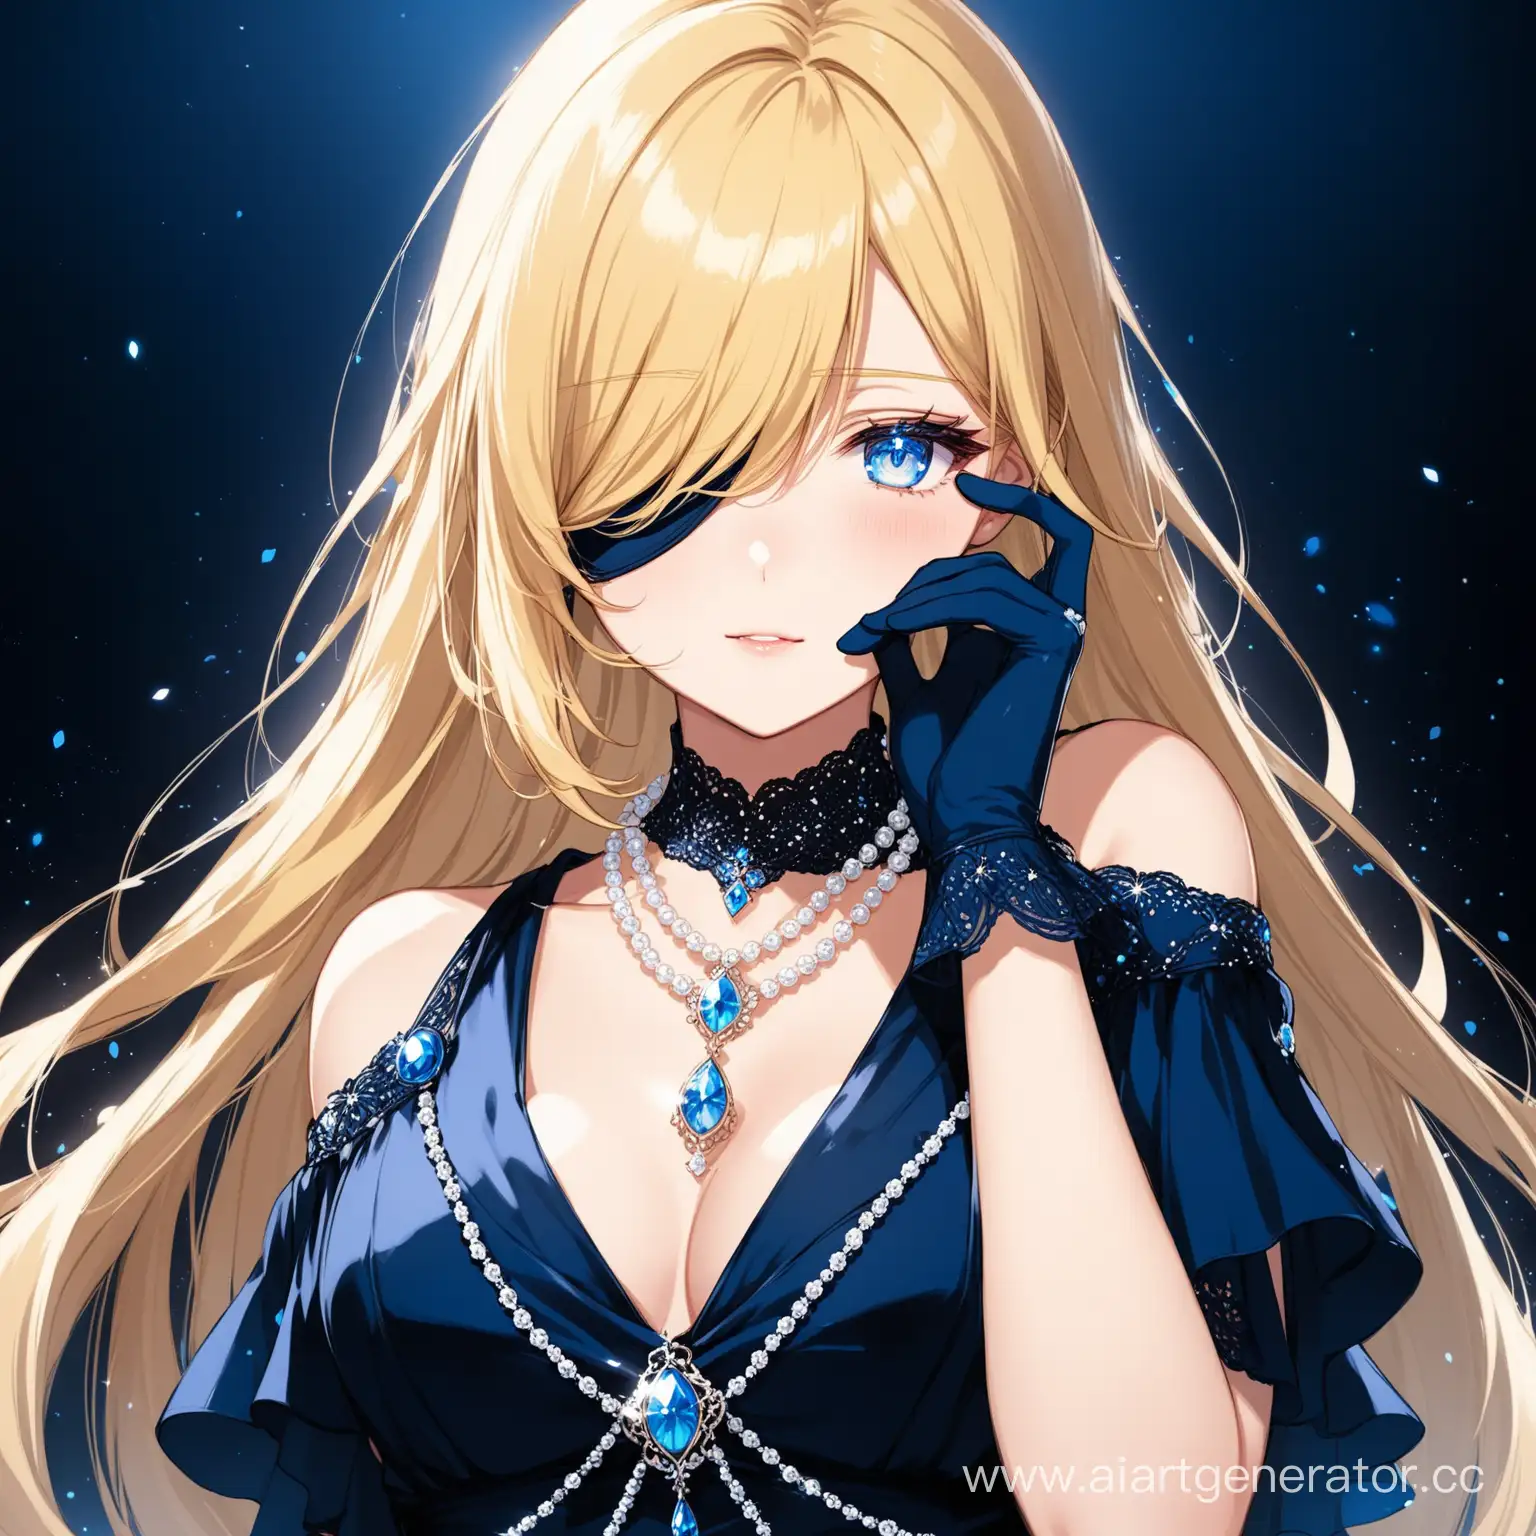 Elegant-Anime-Girl-with-Blue-Eyes-in-Luxurious-Dark-Blue-Dress